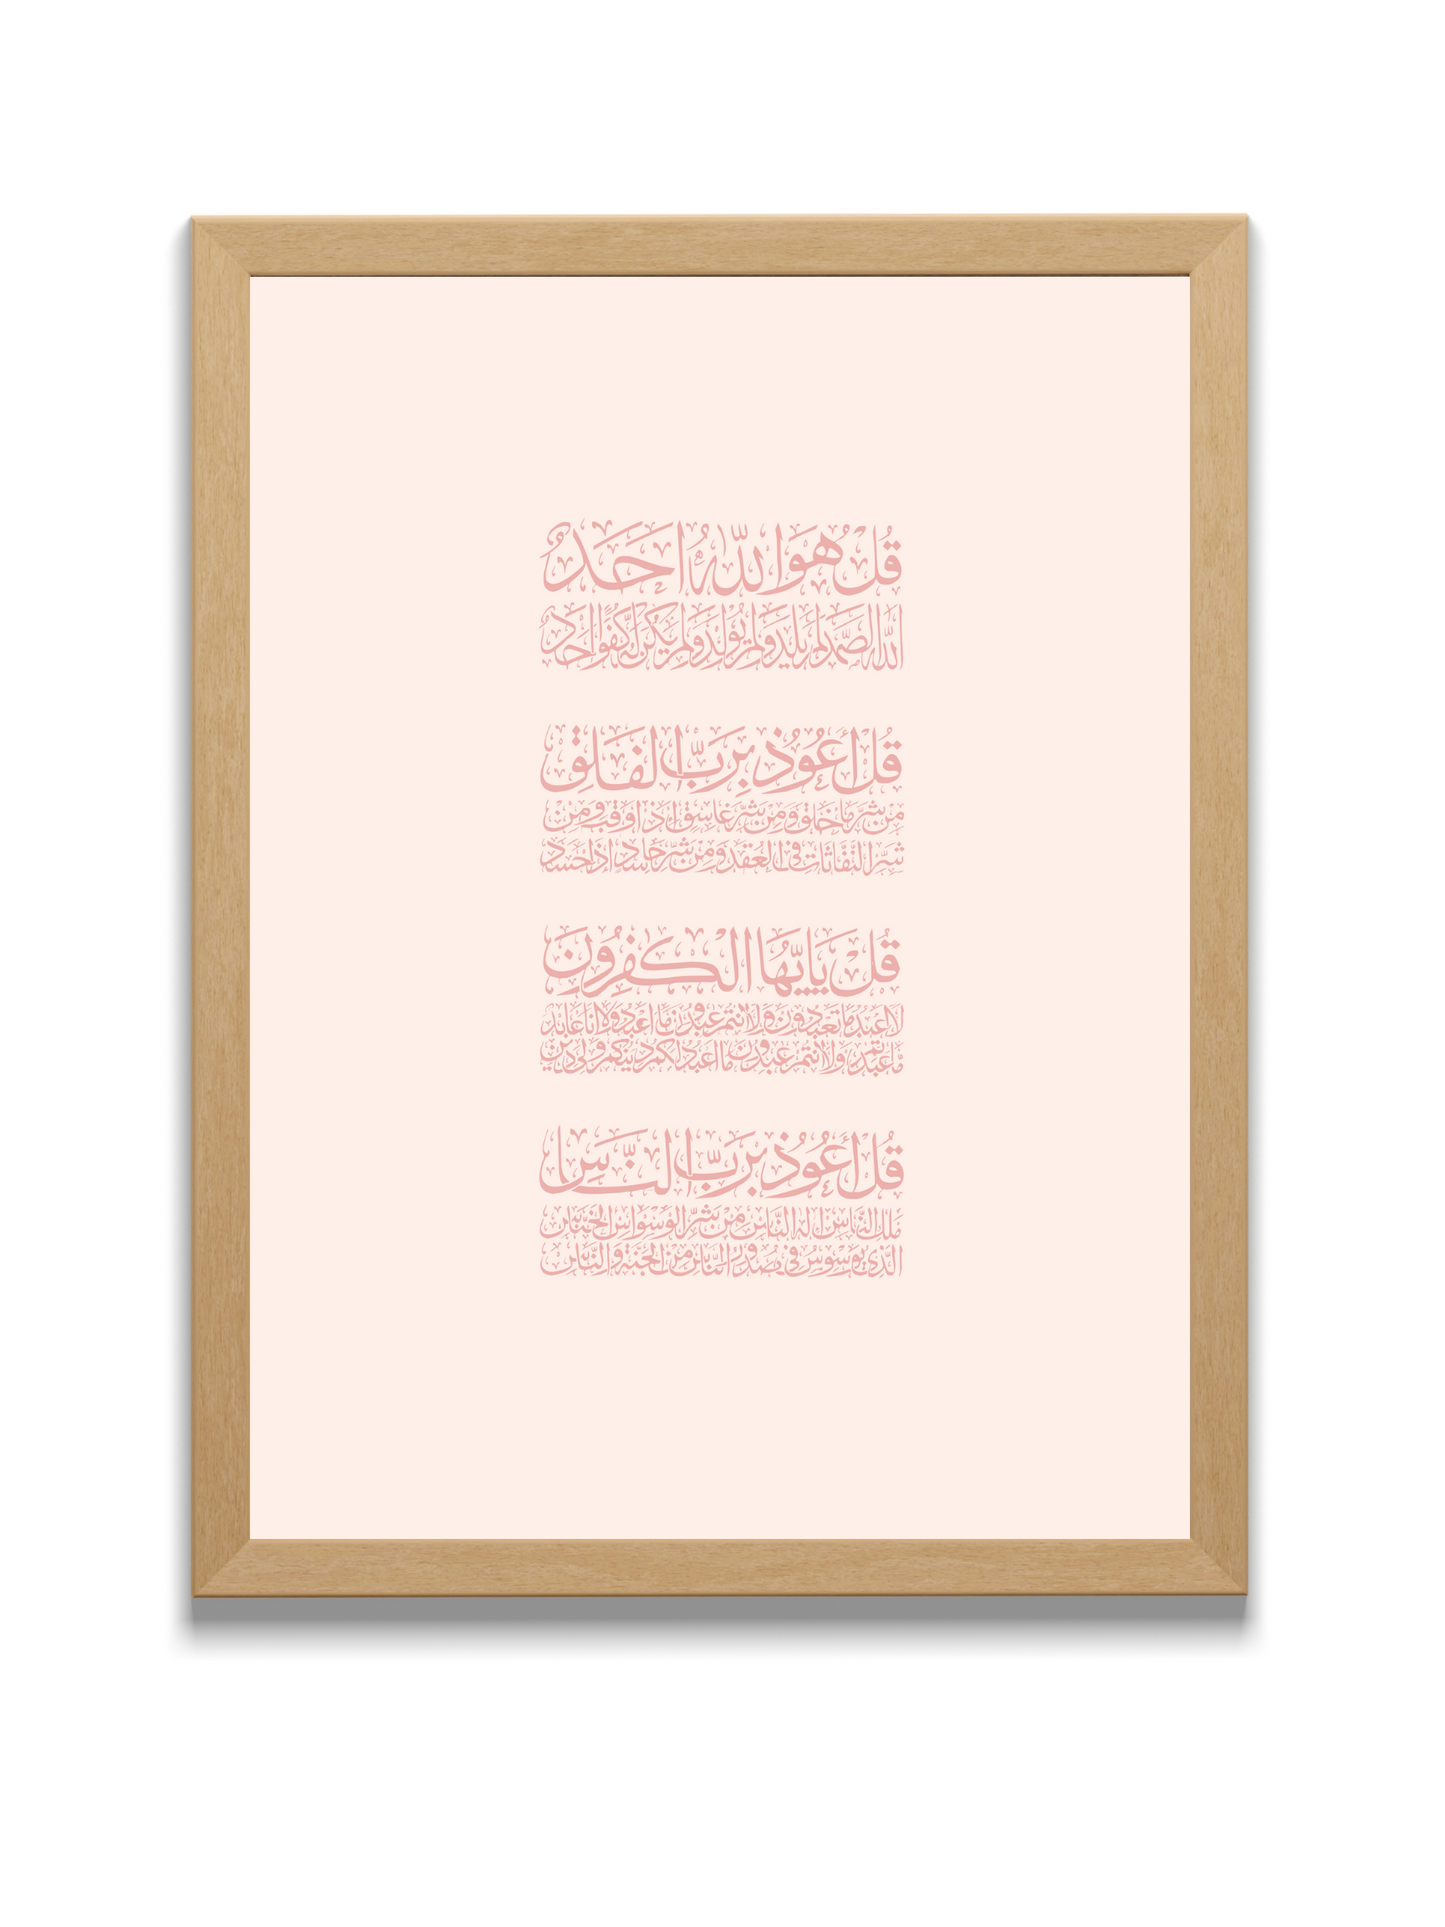 Four “QULs” | Quran | Naskh Calligraphy | Pink